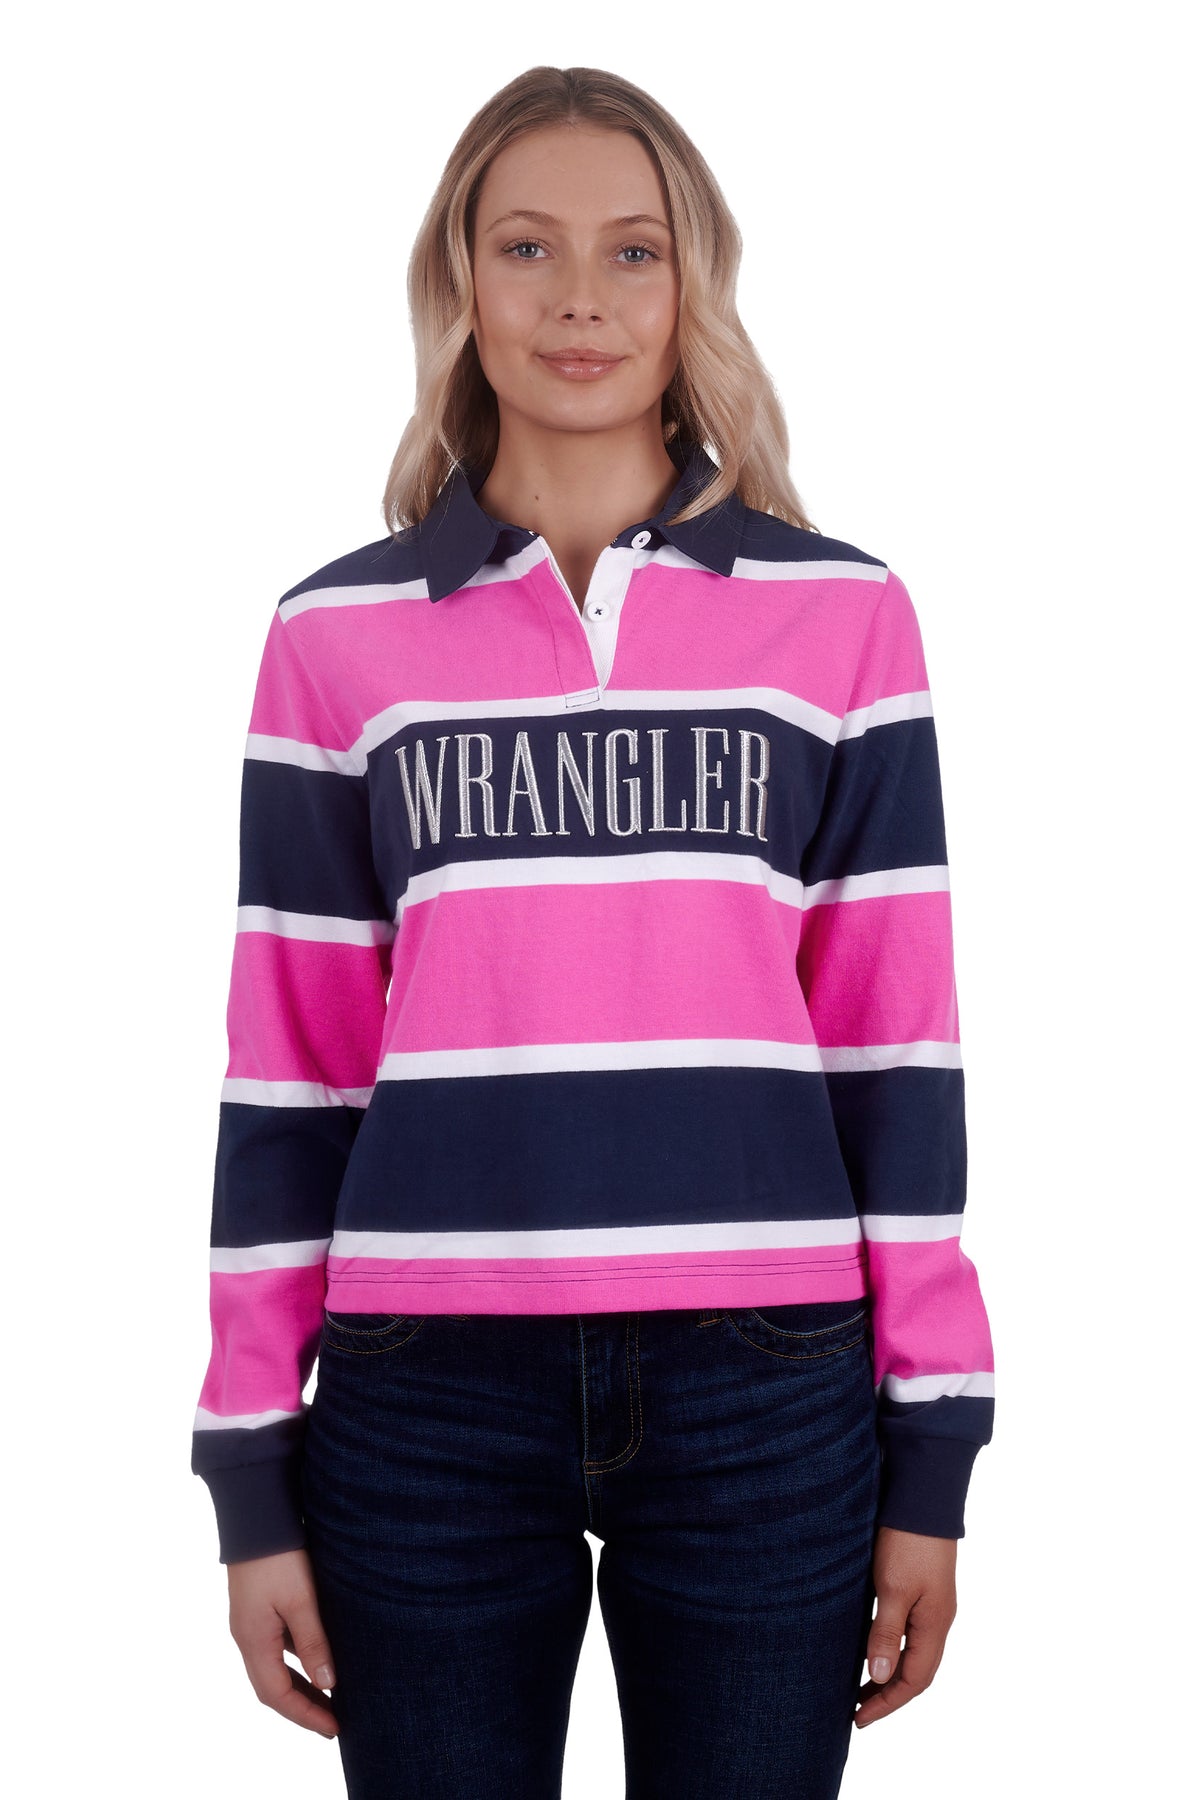 Wrangler Womens Hattie Fashion Rugby - Navy/Pink